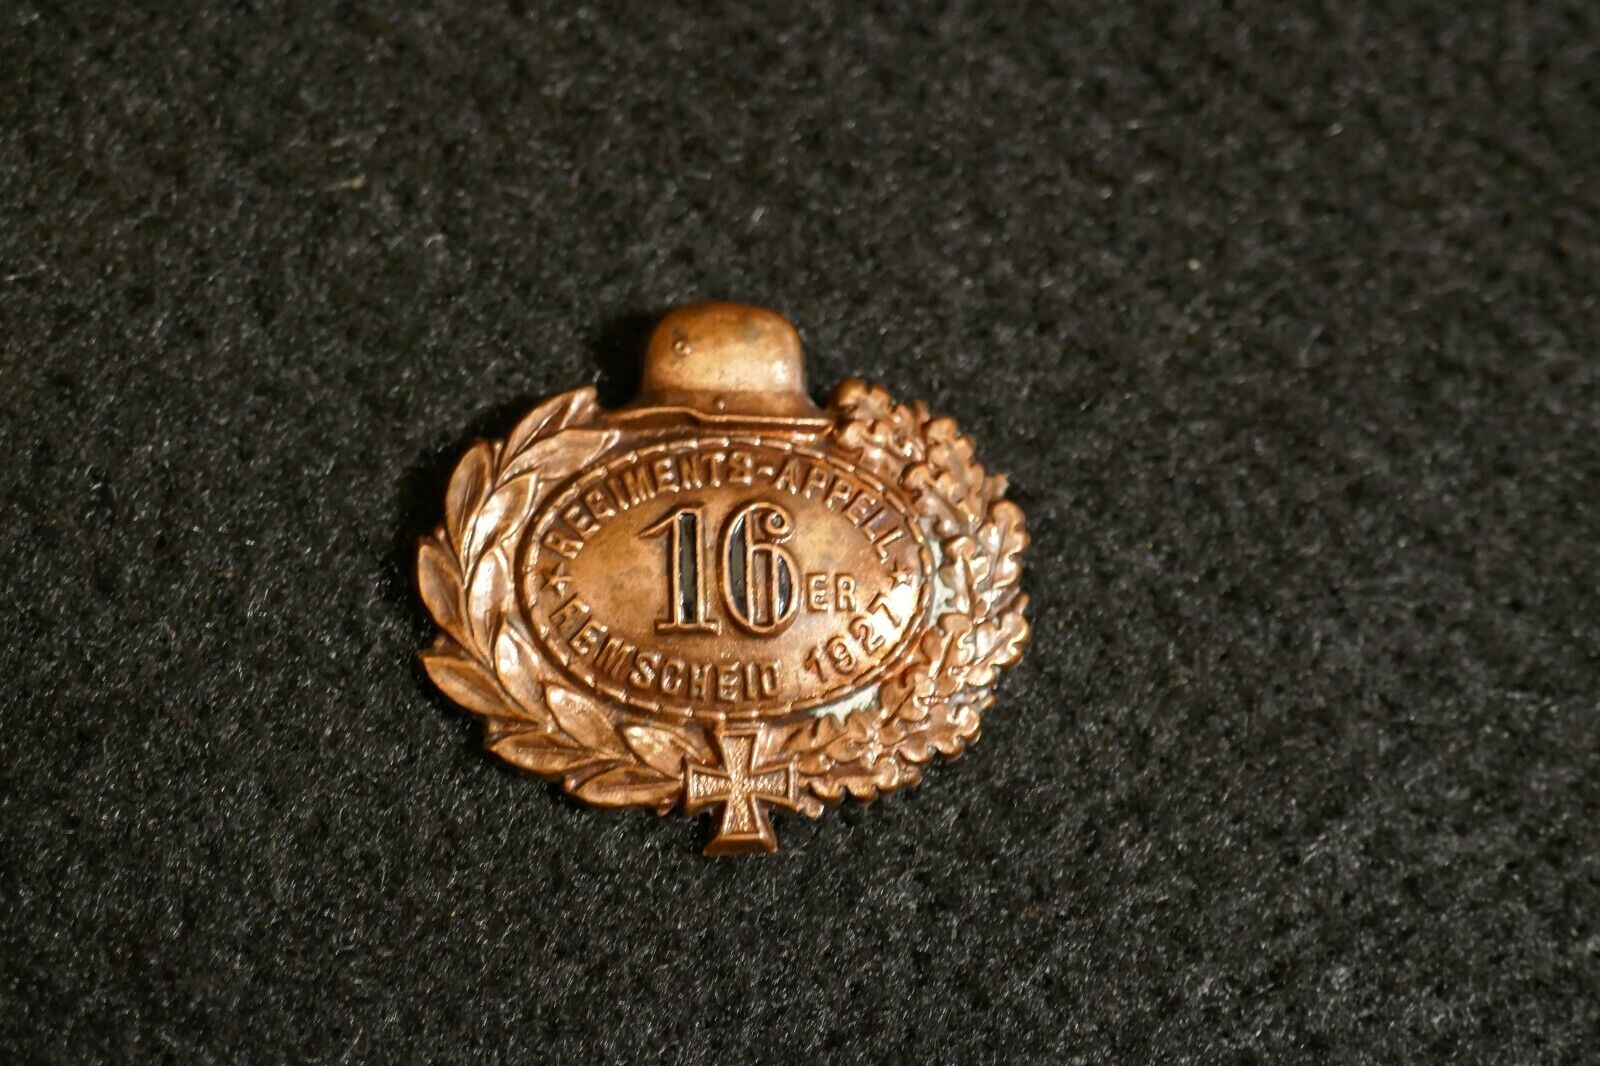 WWI Imperial German Army Veterans 1927 Regiments Appell Remscheid Lapel Pin RARE